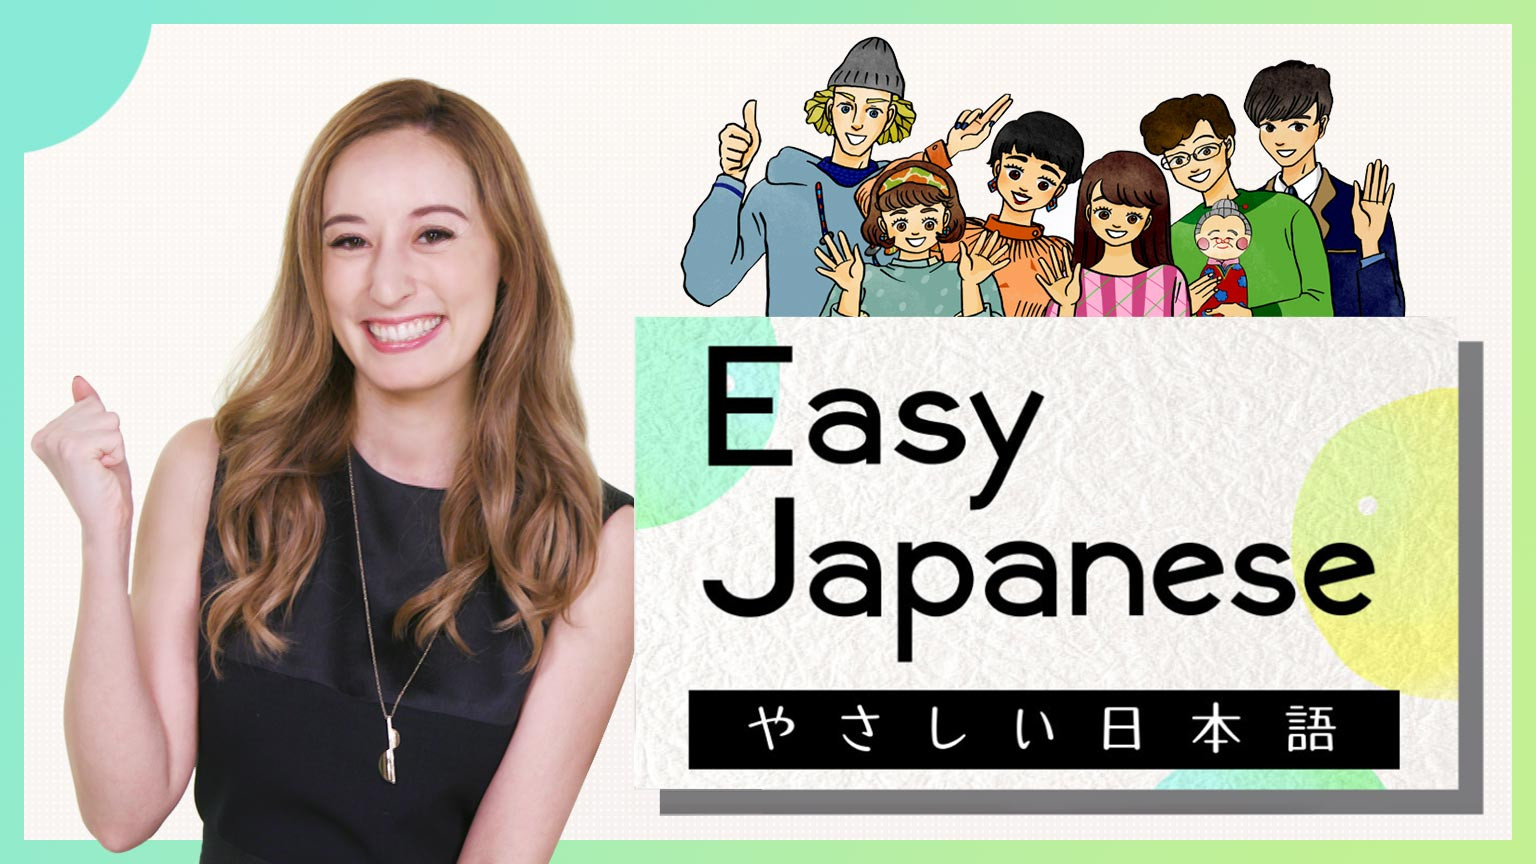 Уроки японского языка
Easy Japanese